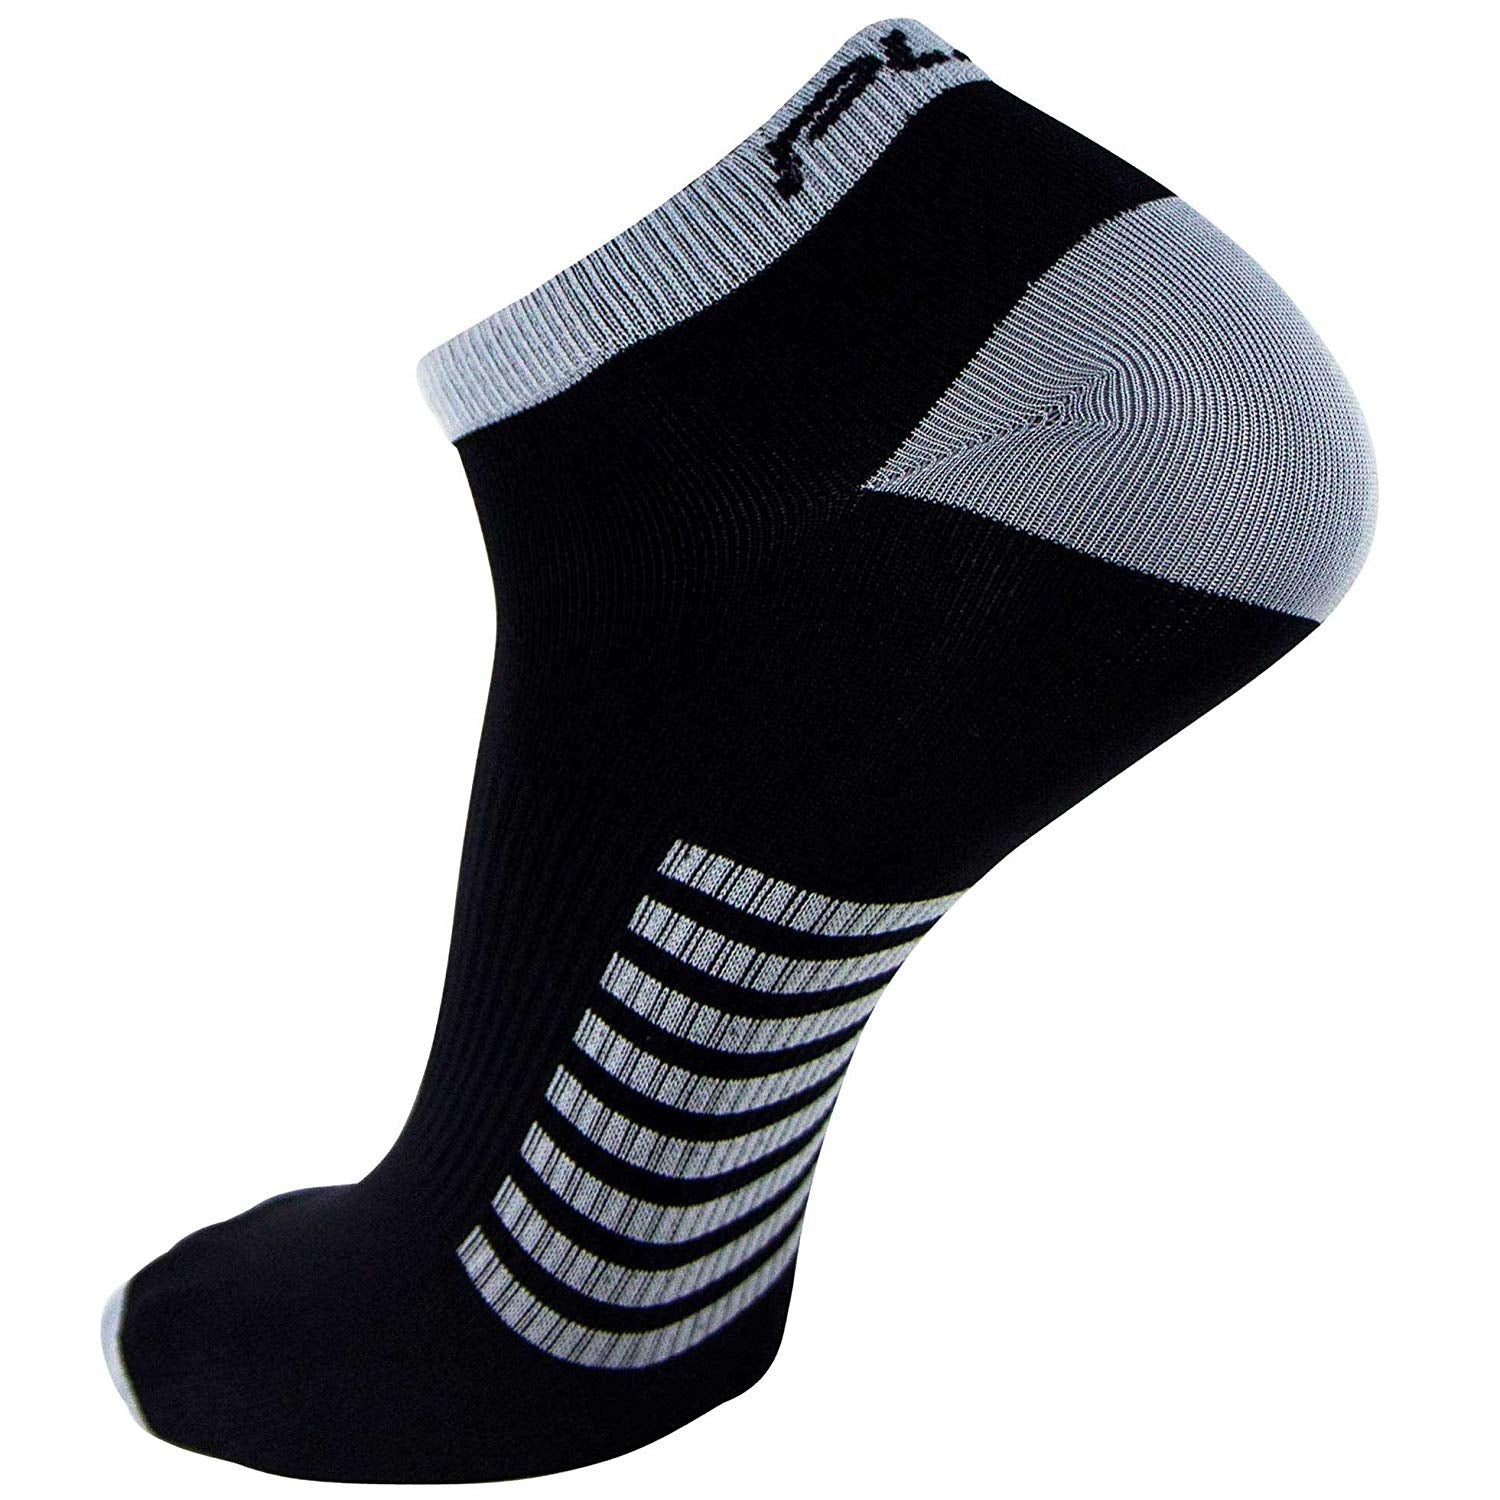 best ultra thin running socks